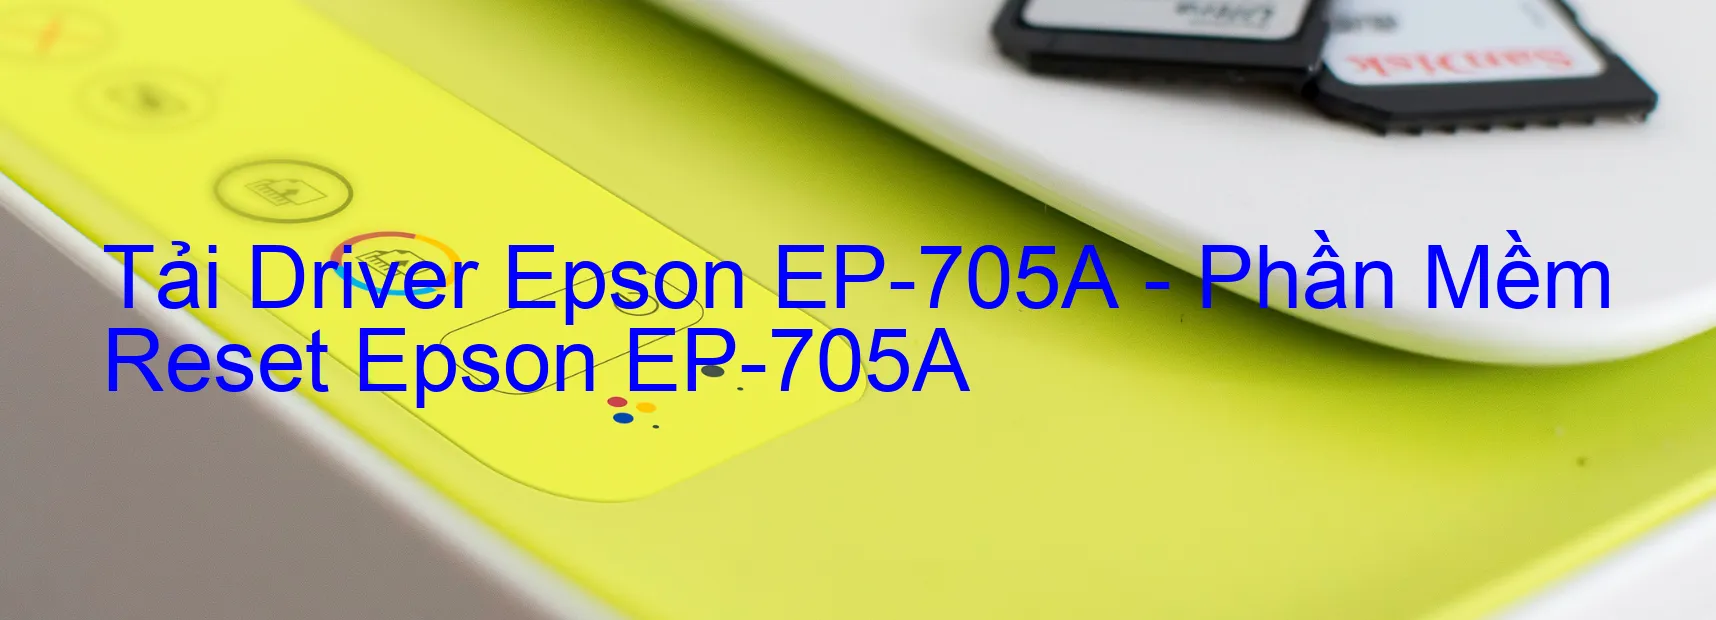 Driver Epson EP-705A, Phần Mềm Reset Epson EP-705A